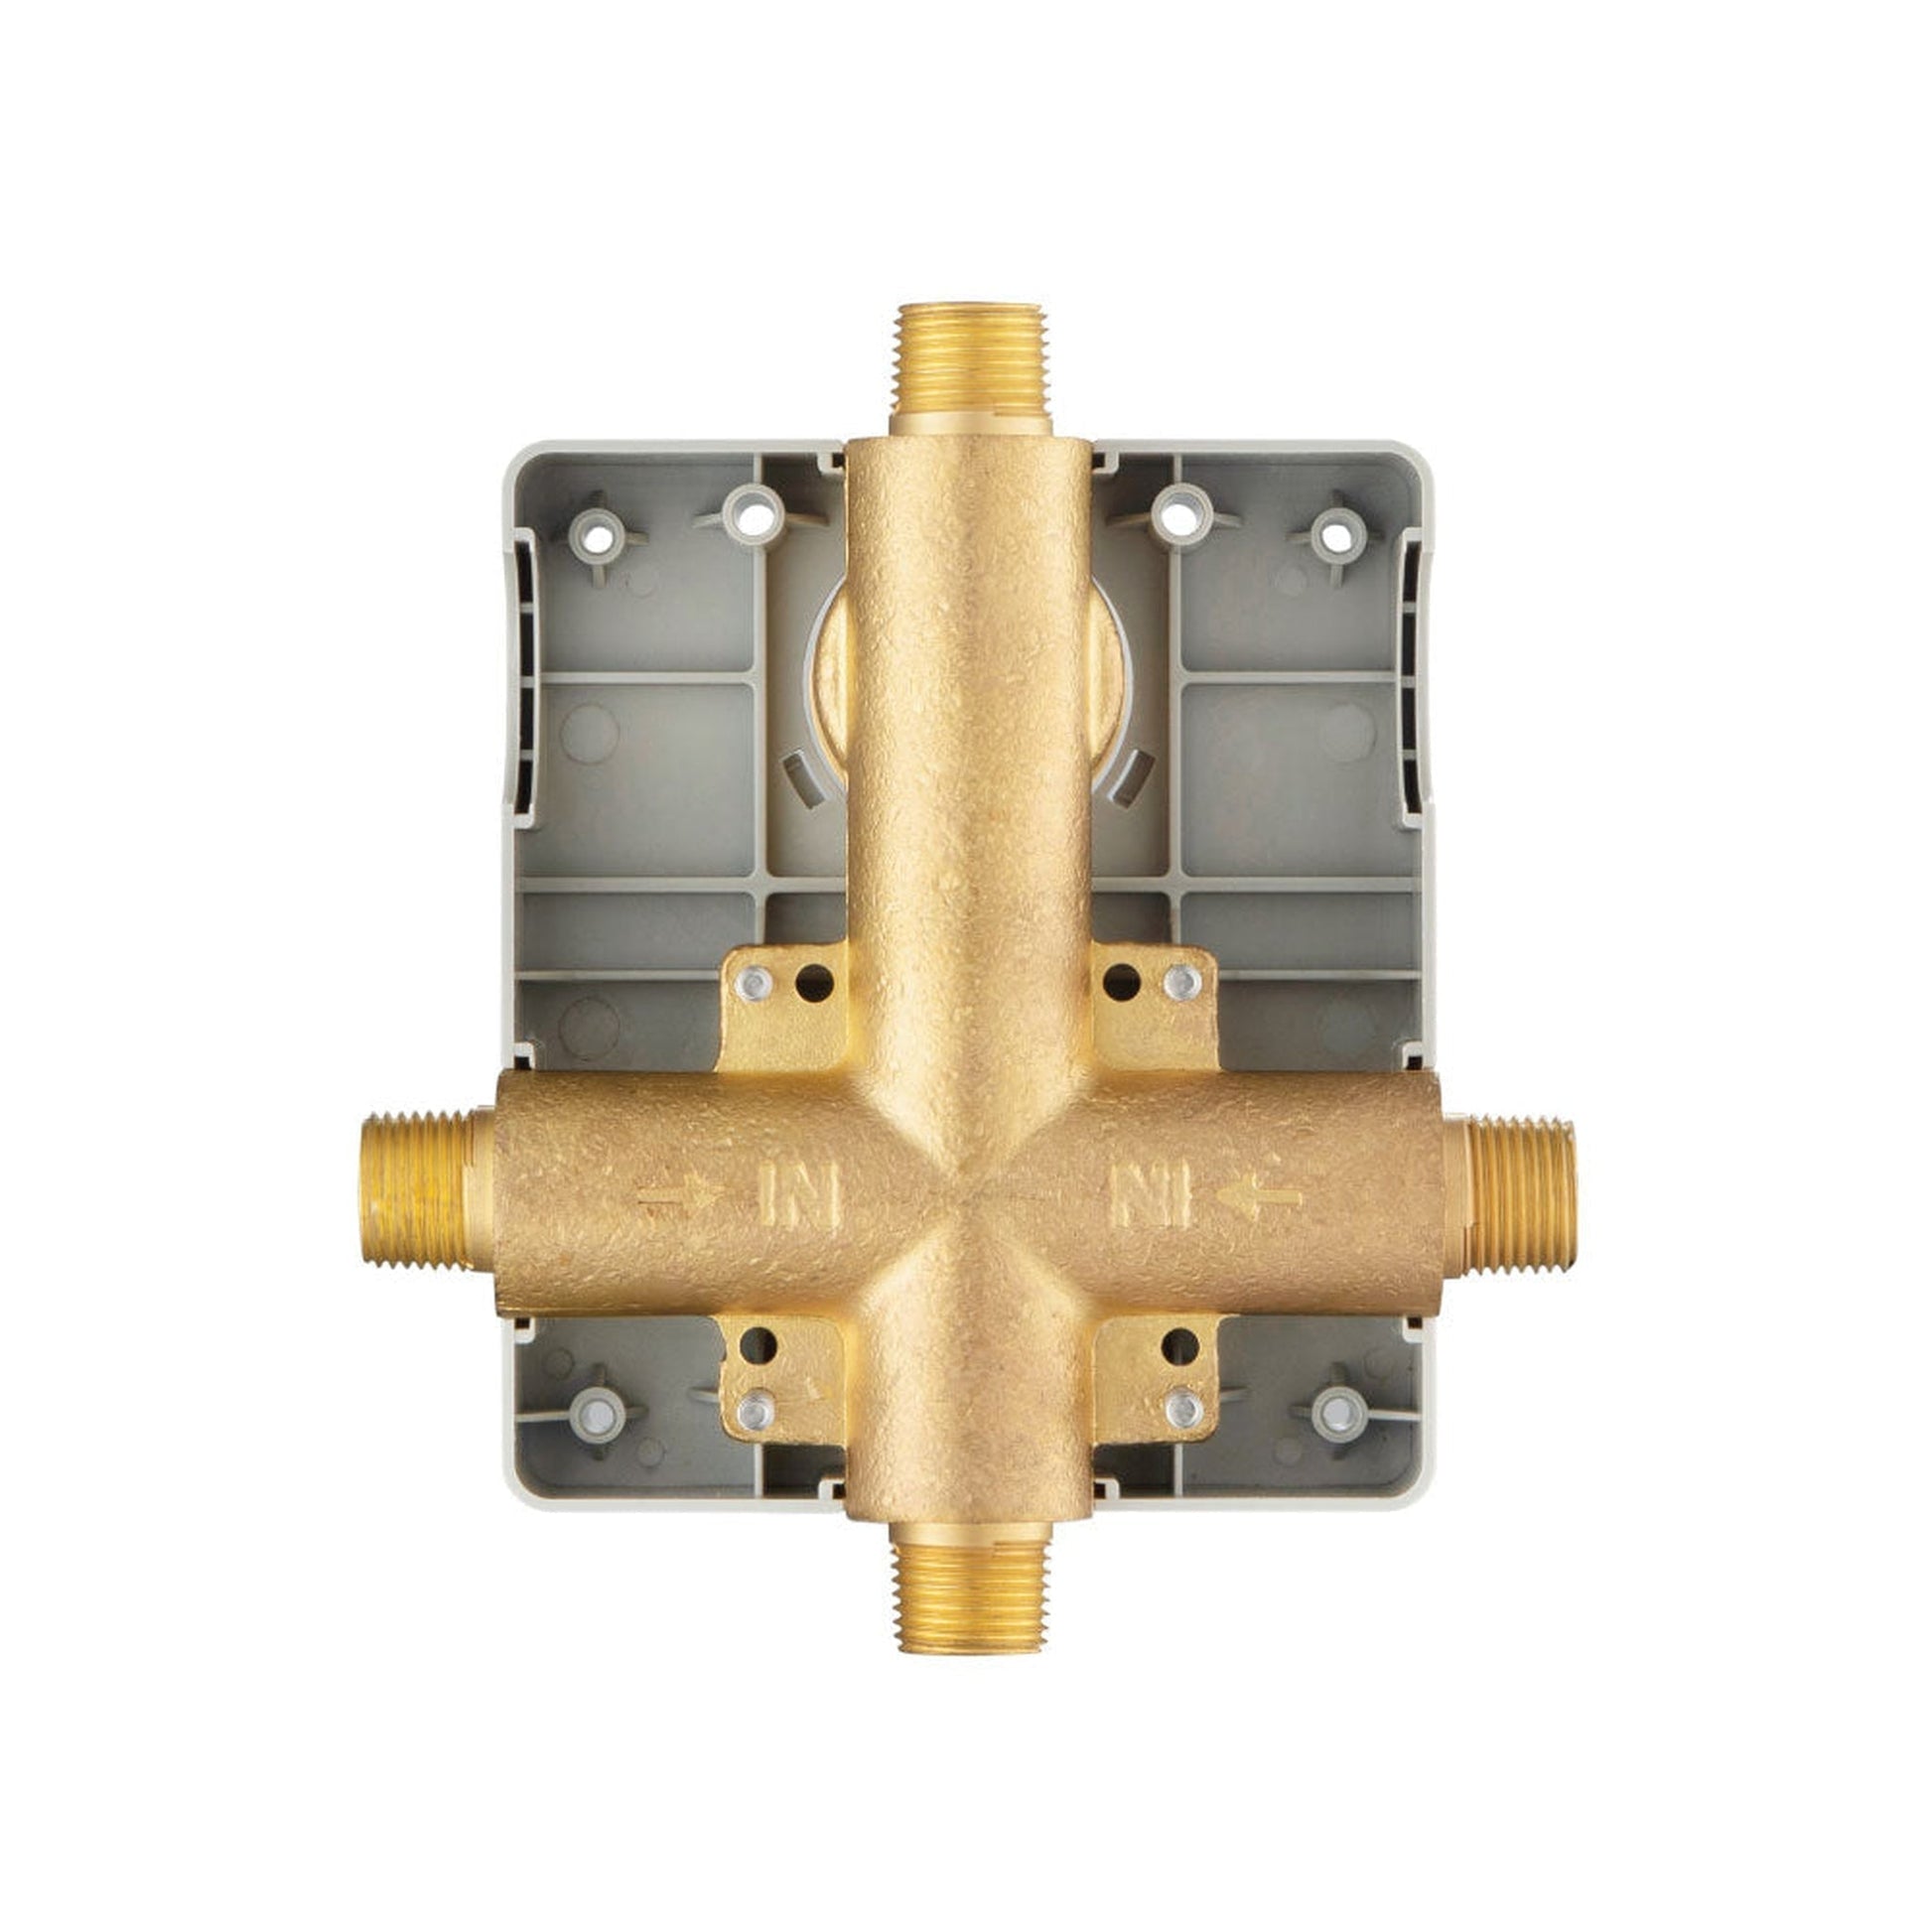 Isenberg Universal Fixtures 7" Rough Brass Pressure Balance Valve With Integrated 2-Way Diverter